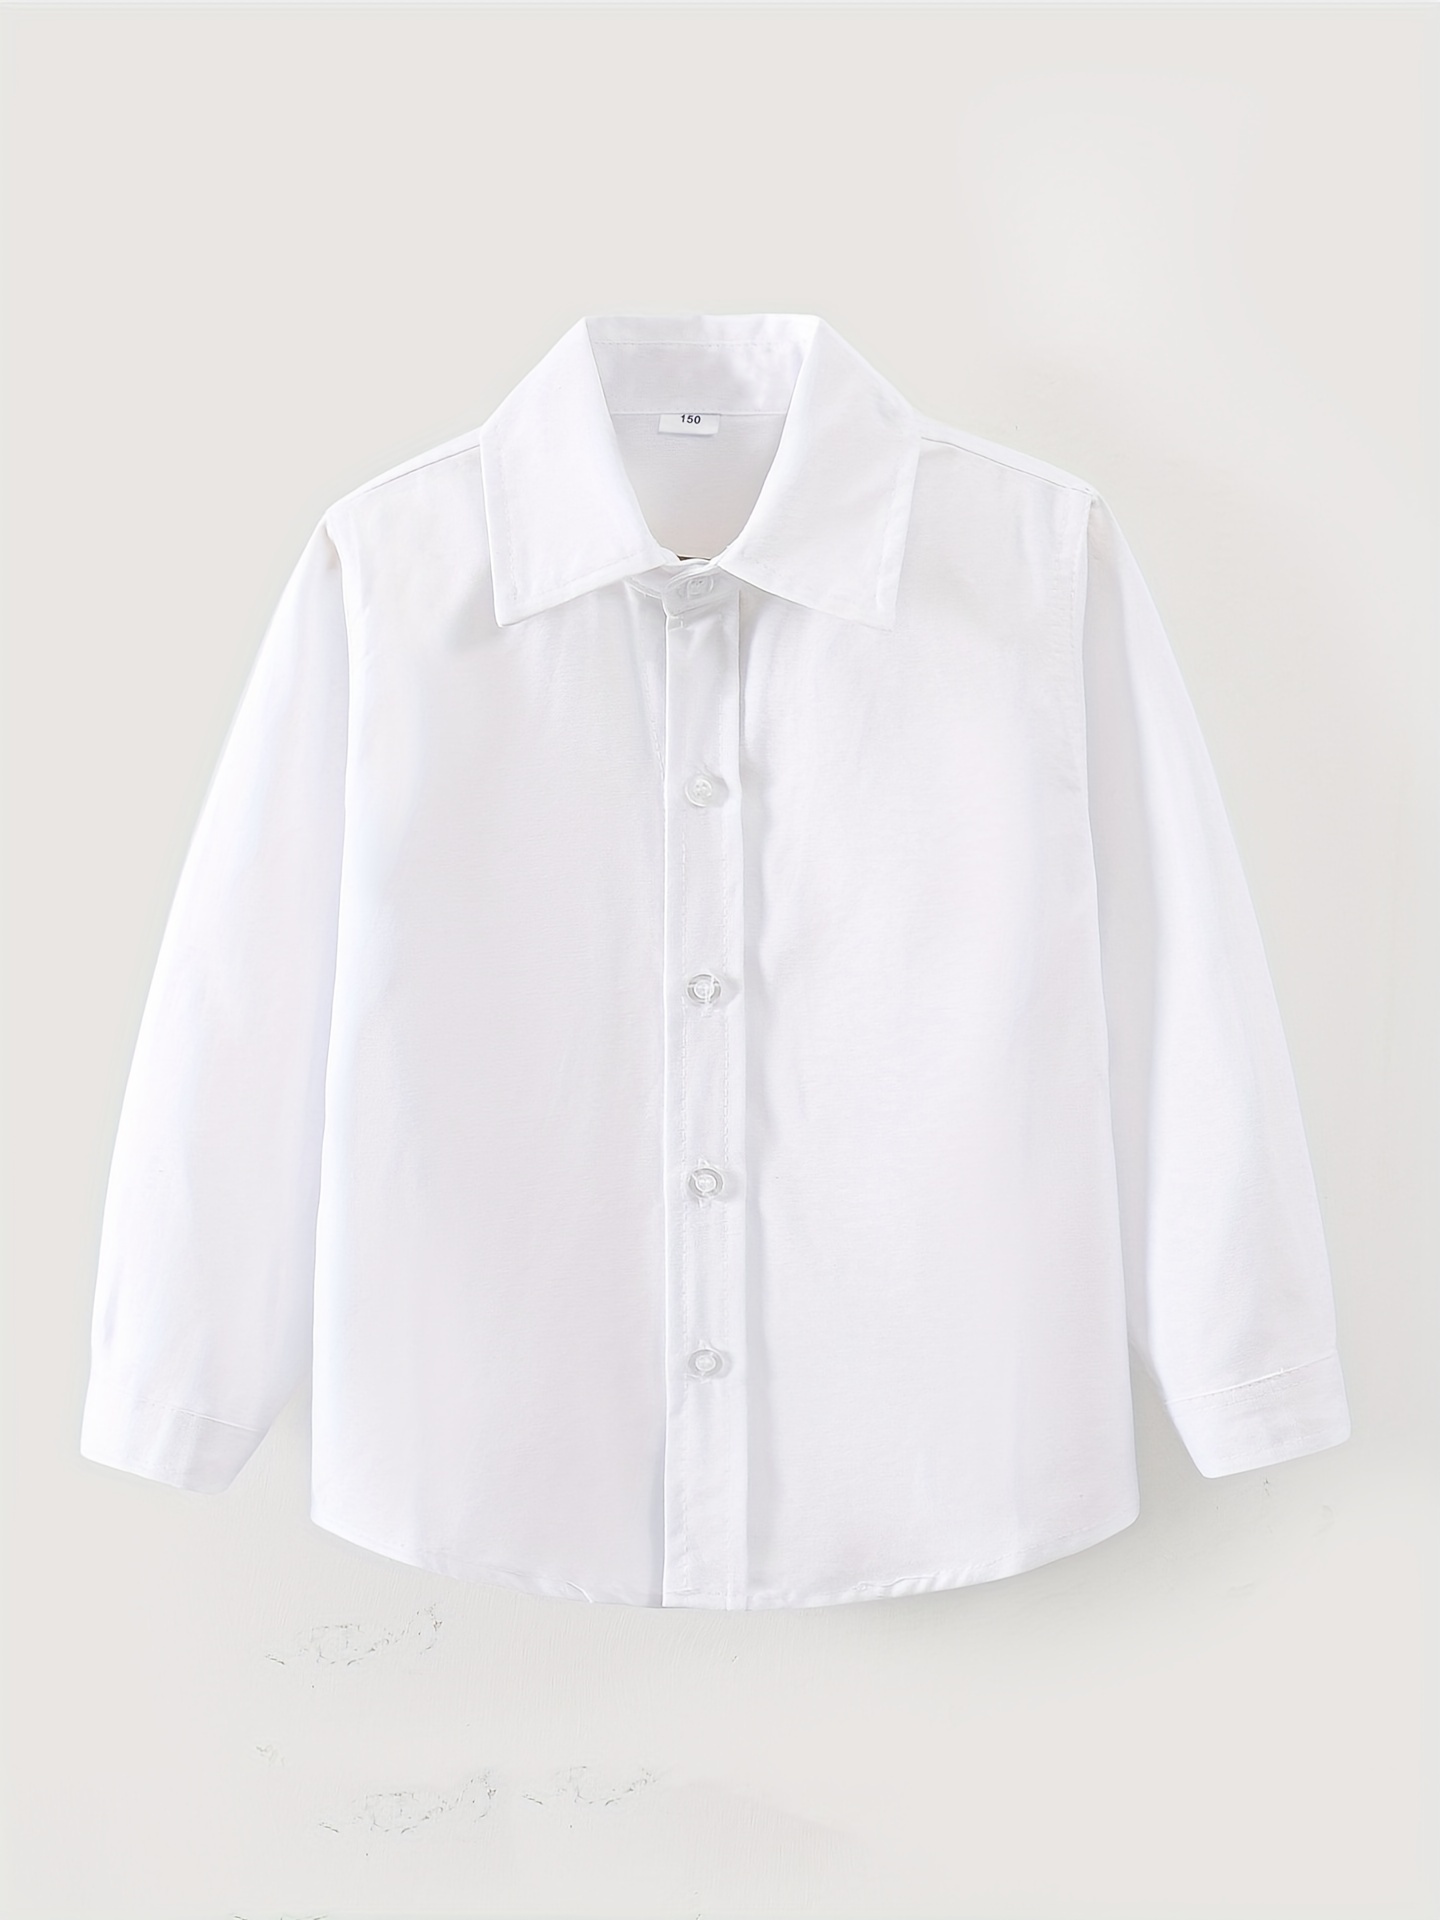 White Girls Long Sleeve Wear White Blouse Formal Kids Chlidren Tops Shirts  Boys Girls Button Baby Girls Tops